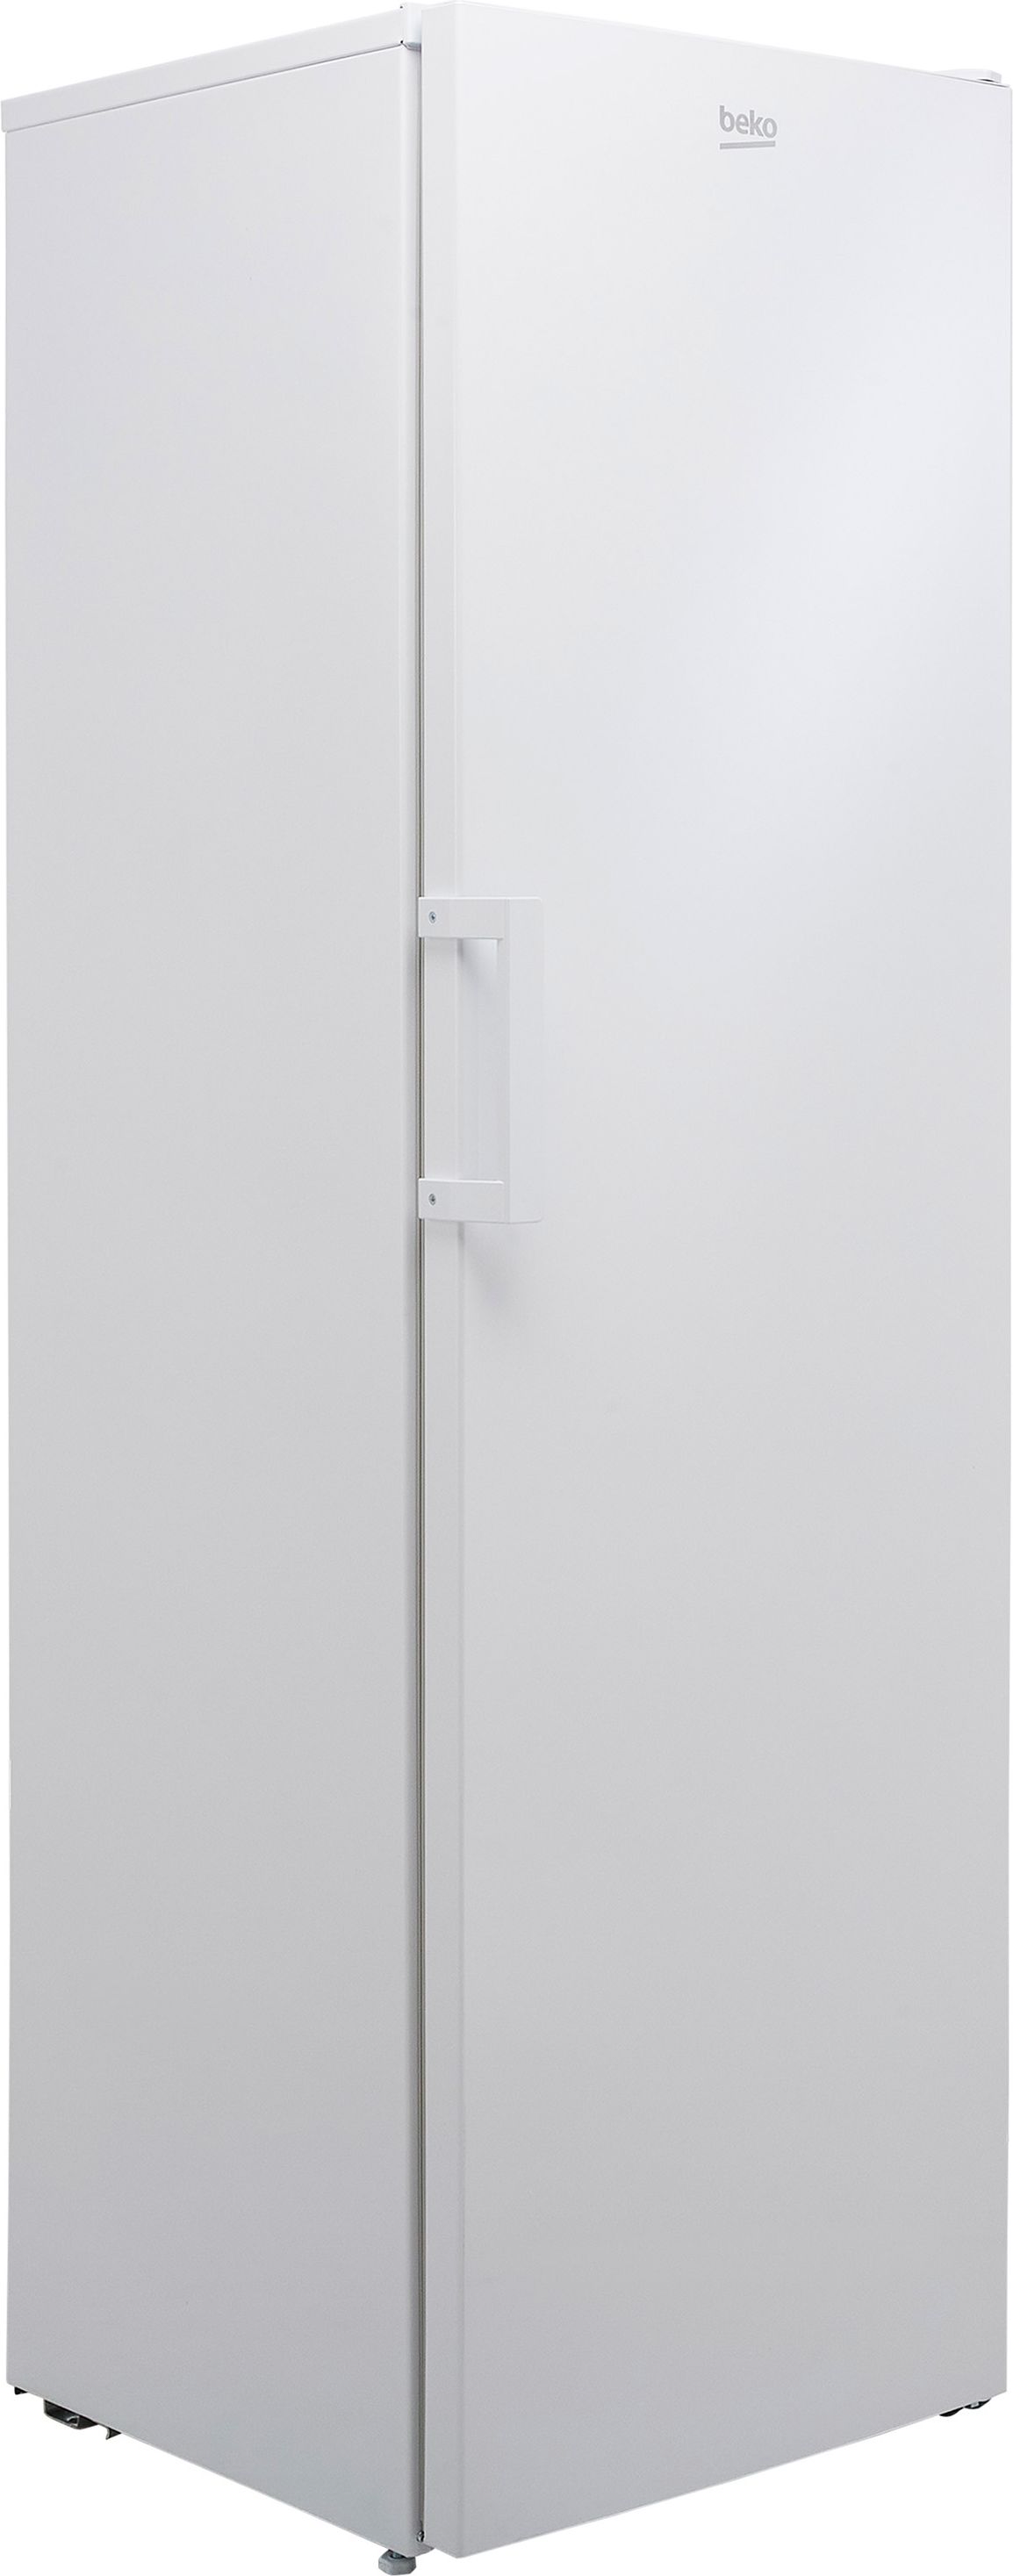 Beko FFP3579W Frost Free Upright Freezer - White - F Rated